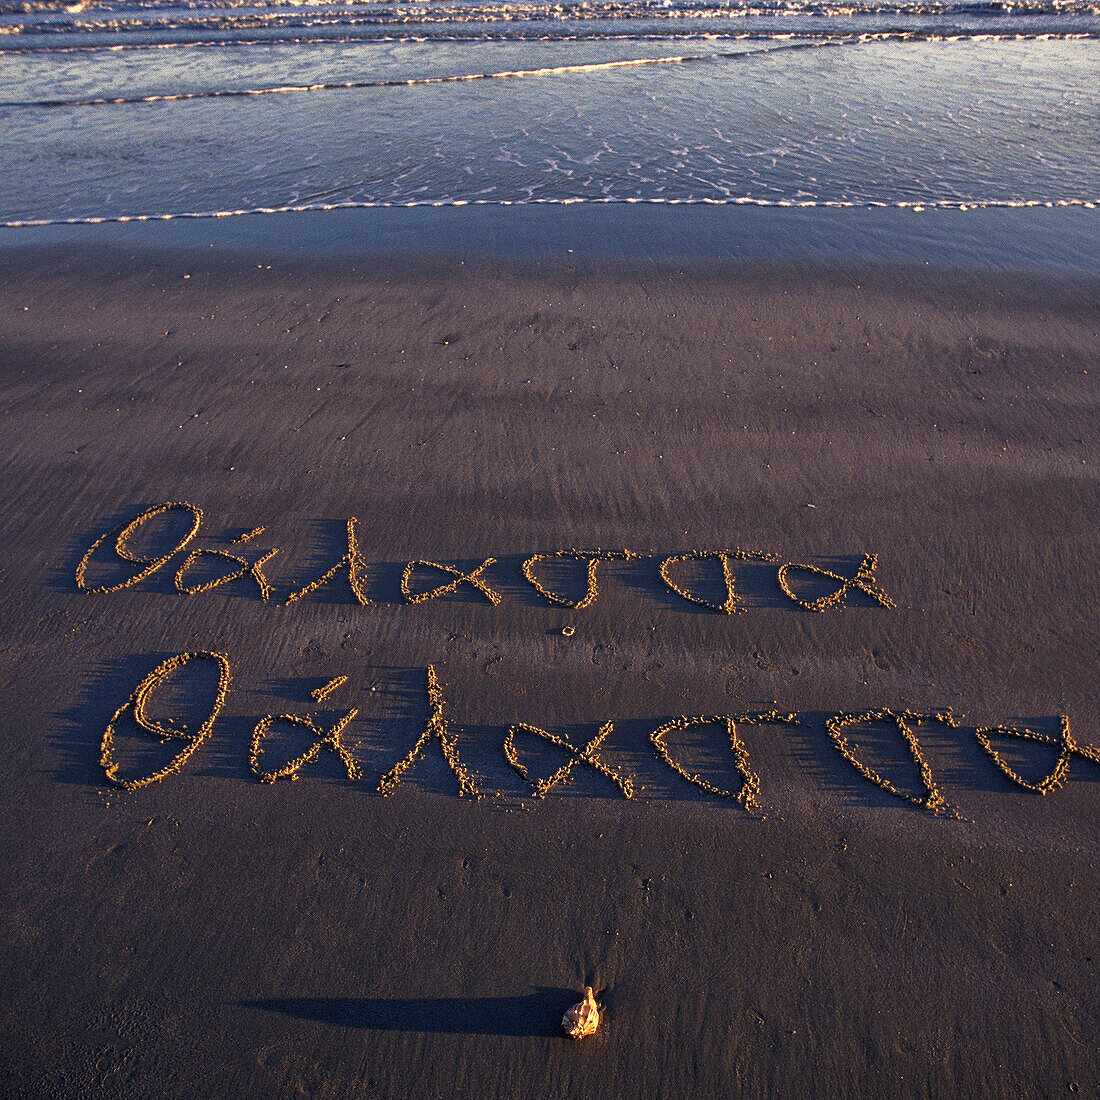 Beach With Greek Writing in the Sand, Hilton Head, South Carolina, USA